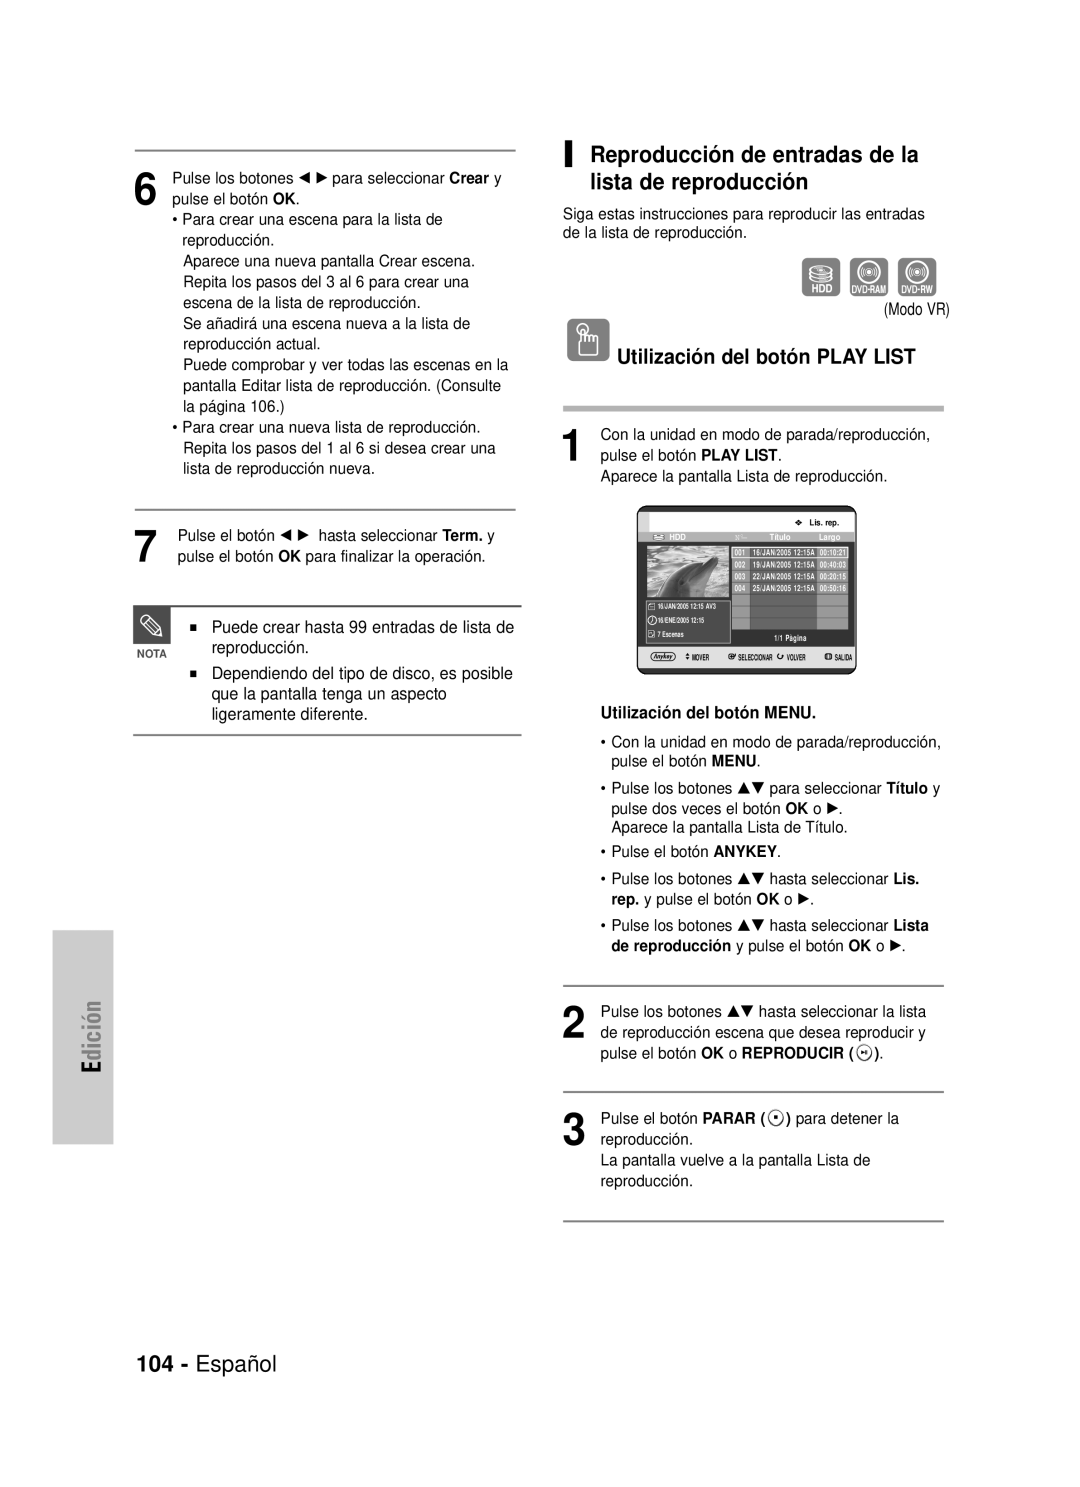 Samsung DVD-HR725/XEN manual Español, Reproducción de entradas de la lista de reproducción, Utilización del botón PLAY LIST 